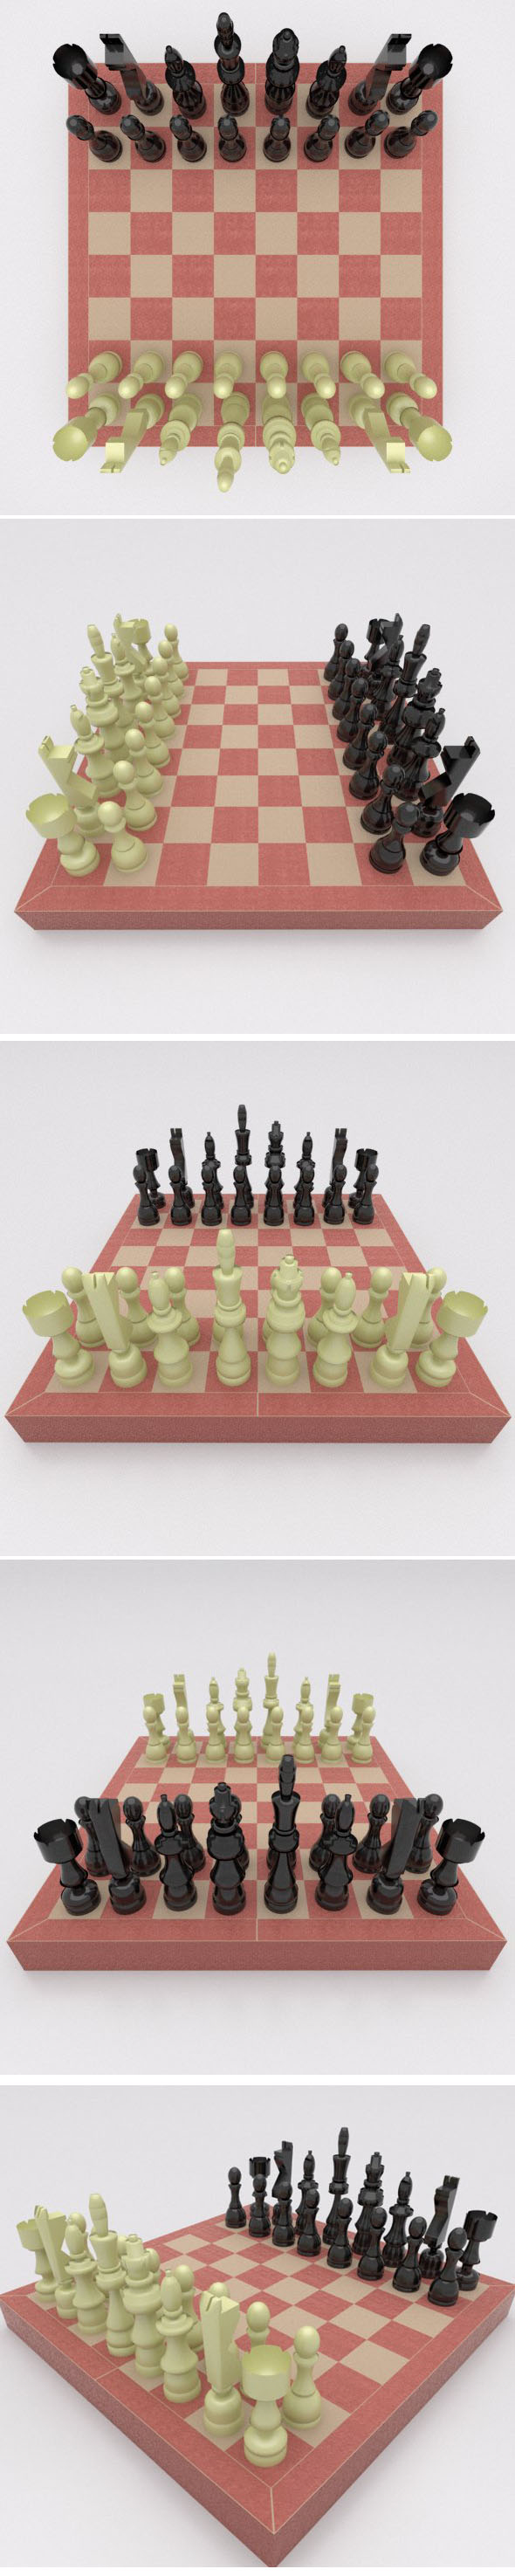 Chess game set - 3Docean 16099599